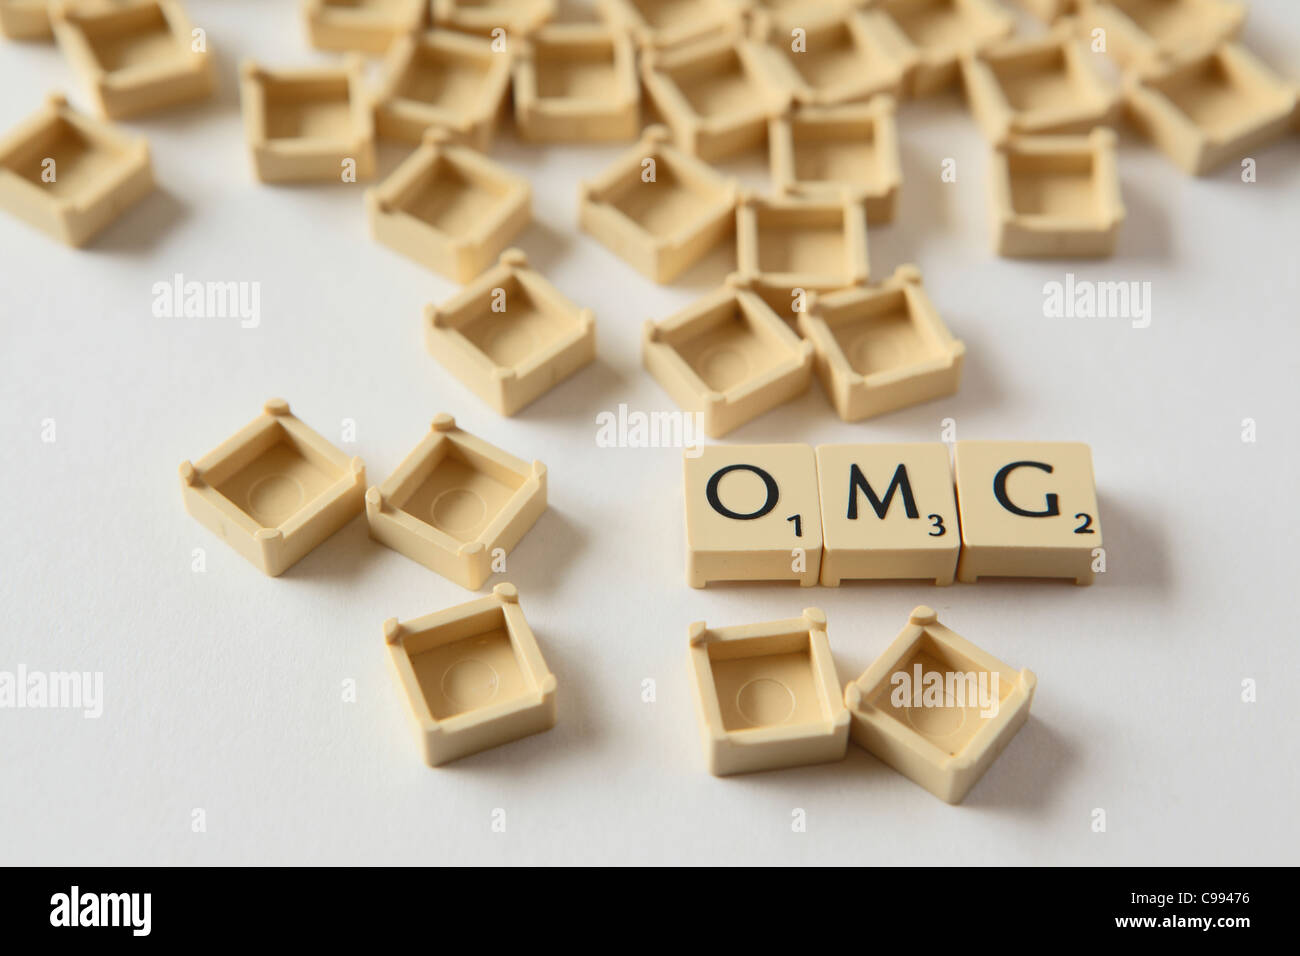 Carta de Scrabble en plazas, studio fotografía, UK Foto de stock